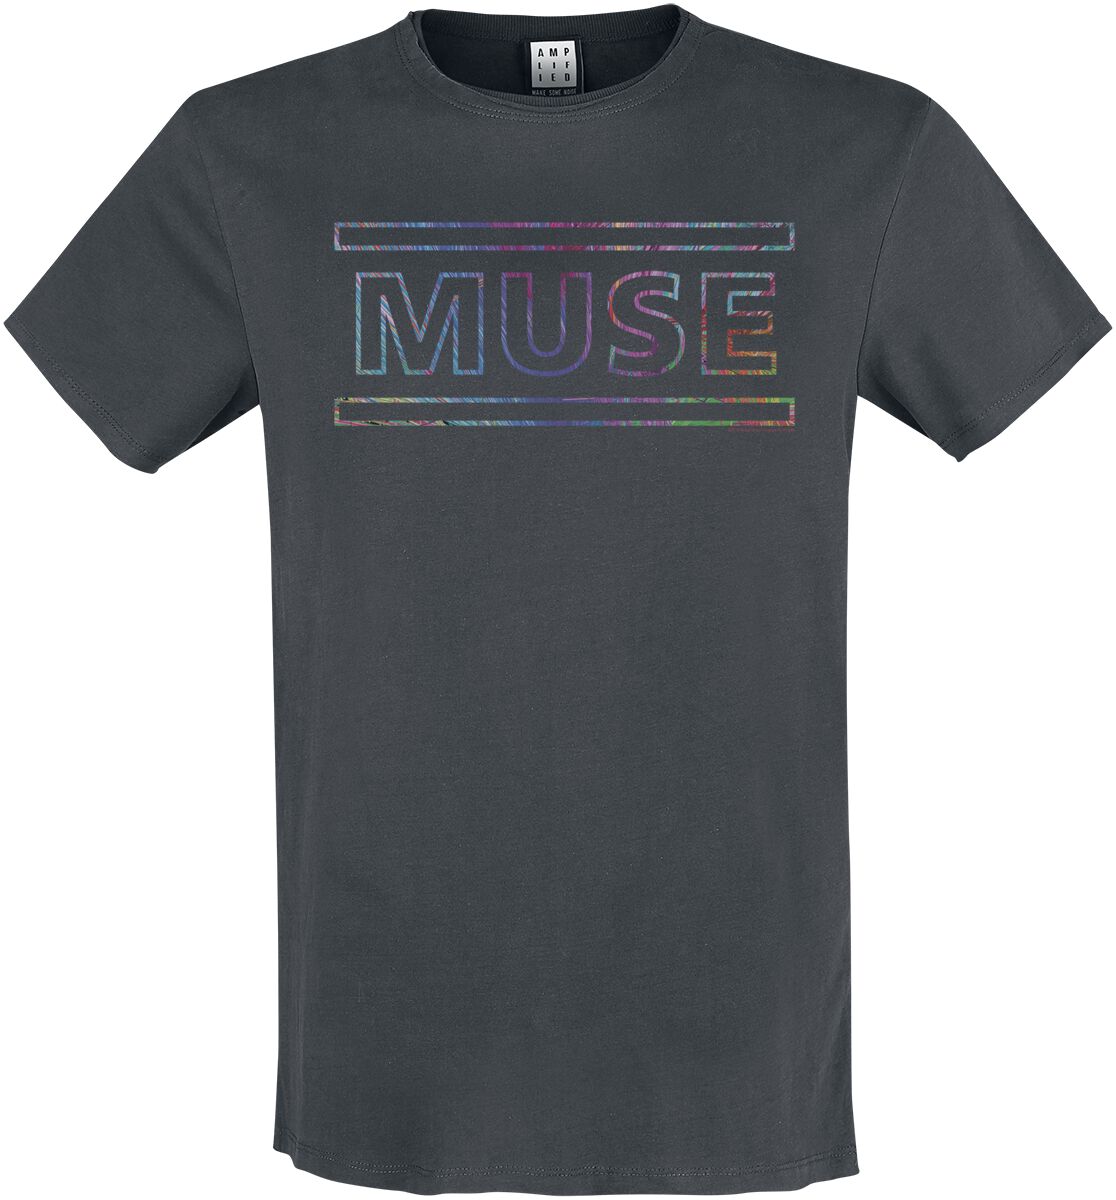 Muse T-Shirt - Amplified Collection - Logo - S bis 3XL - für Männer - Größe 3XL - charcoal  - Lizenziertes Merchandise!